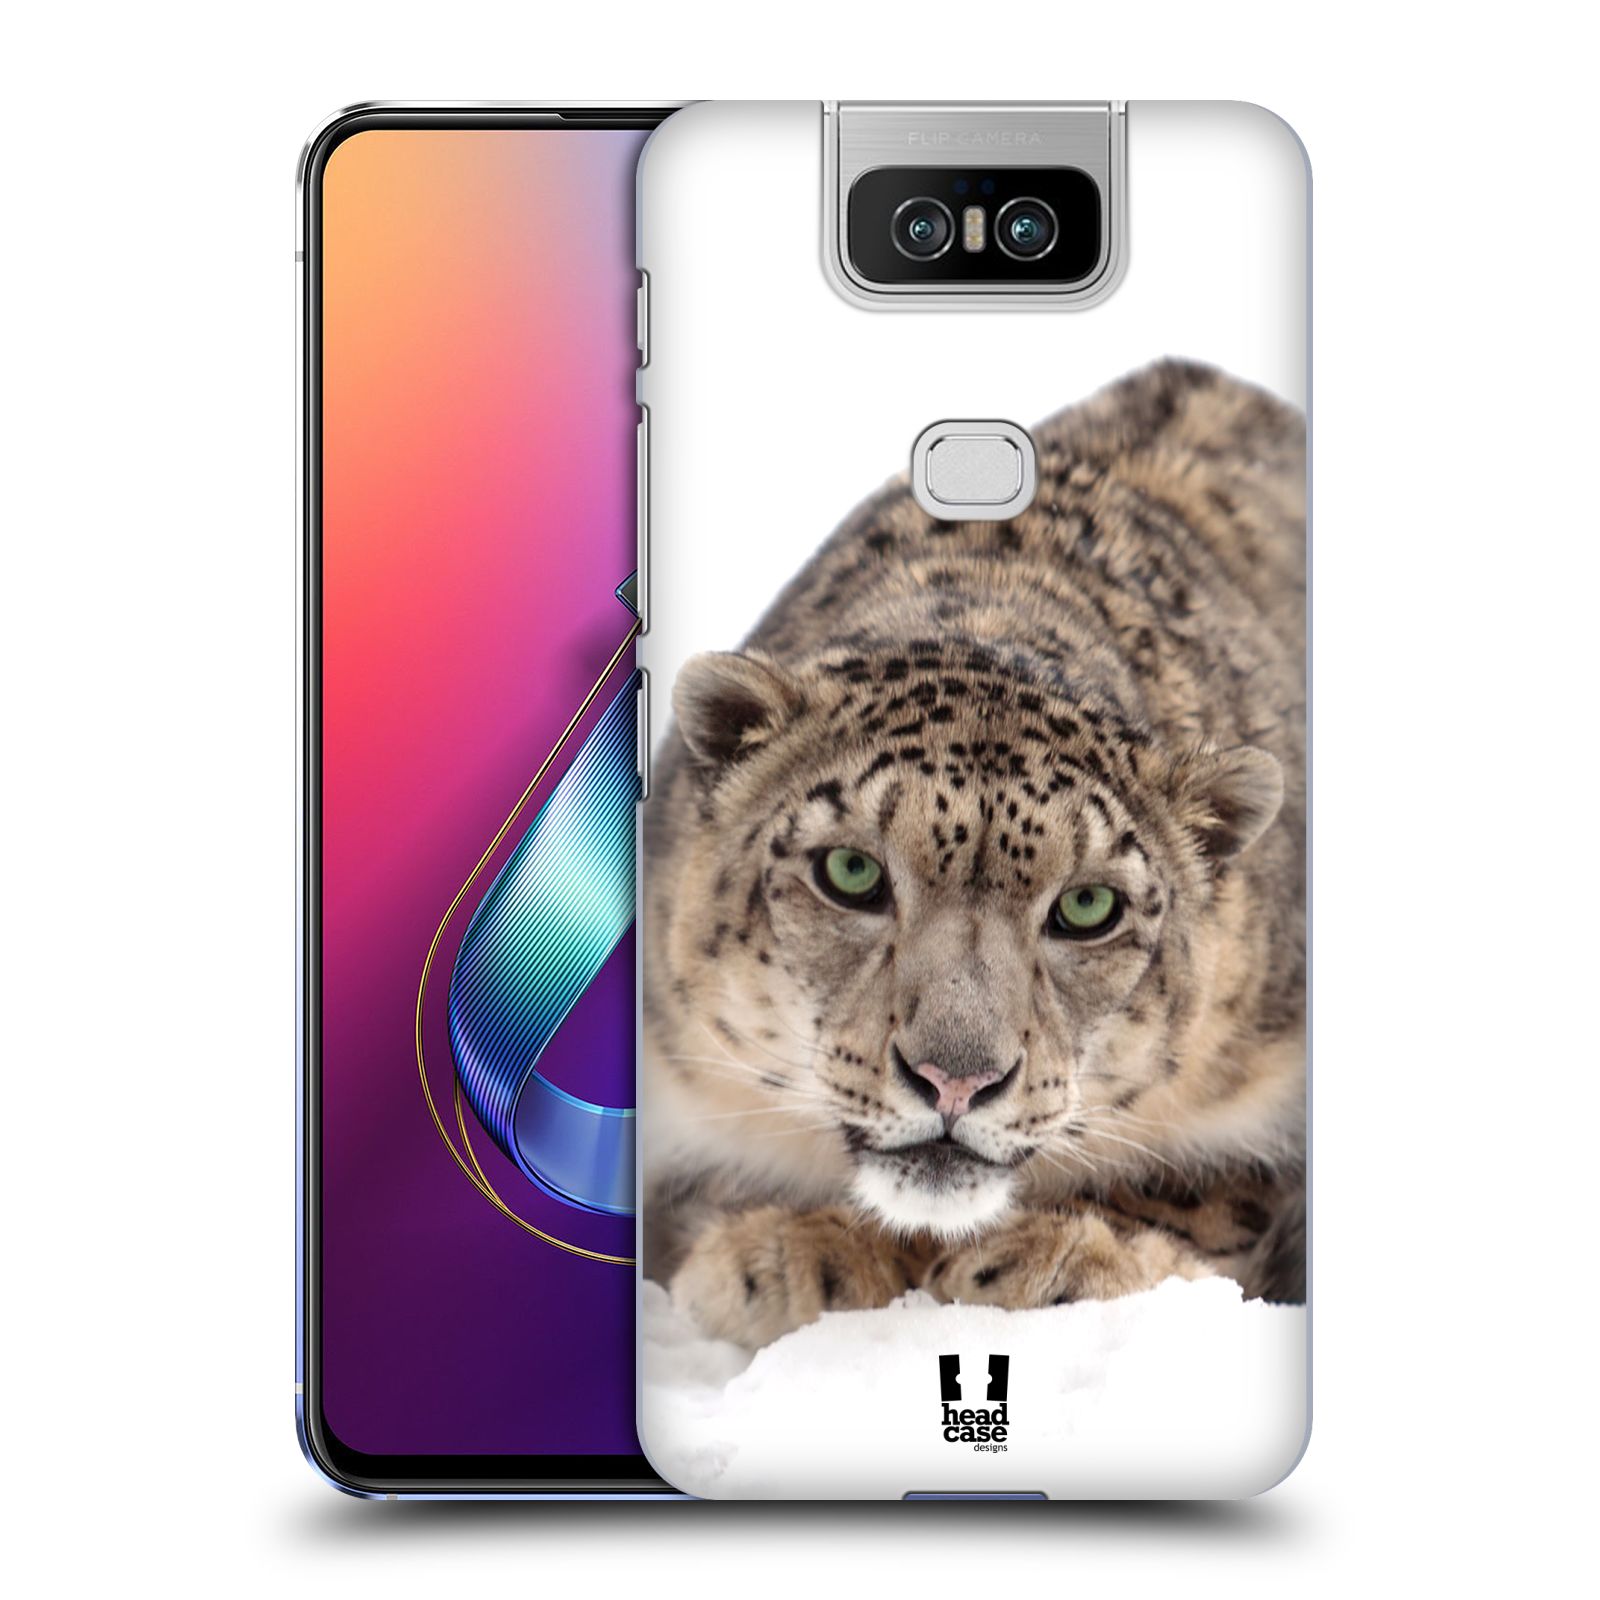 Pouzdro na mobil Asus Zenfone 6 ZS630KL - HEAD CASE - vzor Divočina, Divoký život a zvířata foto SNĚŽNÝ LEOPARD